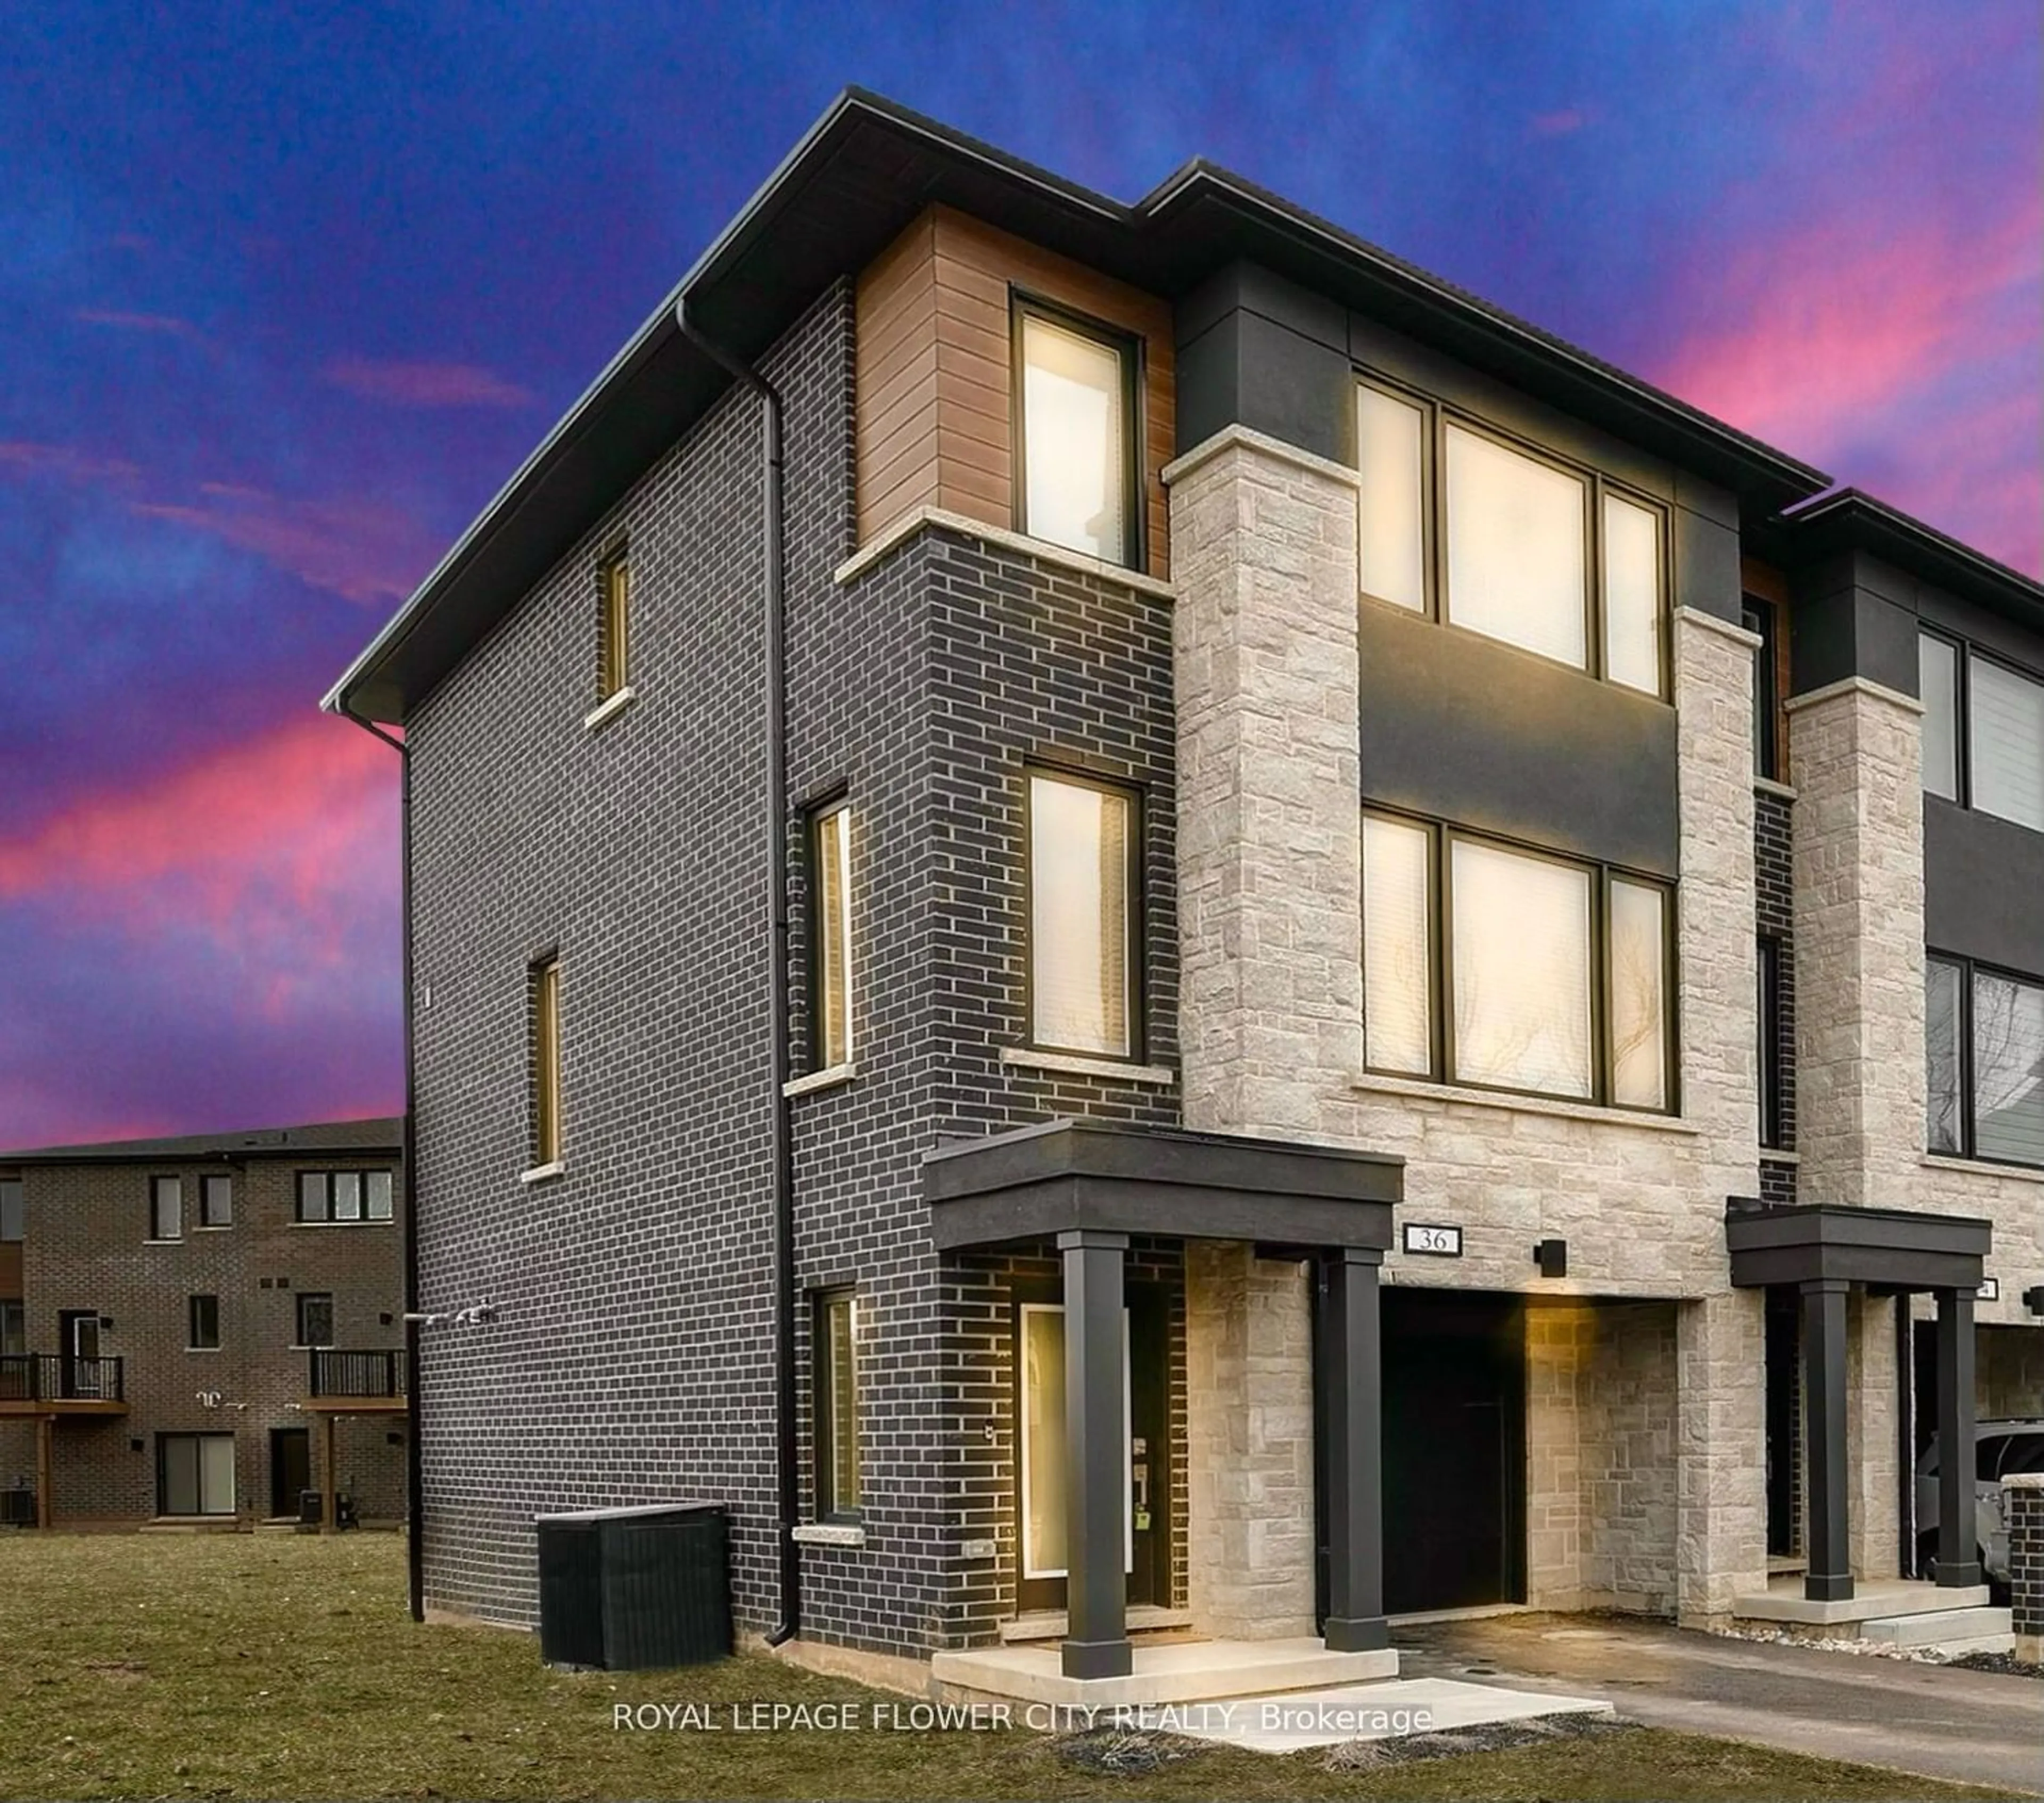 Home with brick exterior material for 36 Briar Crt, Halton Hills Ontario L7G 0P6